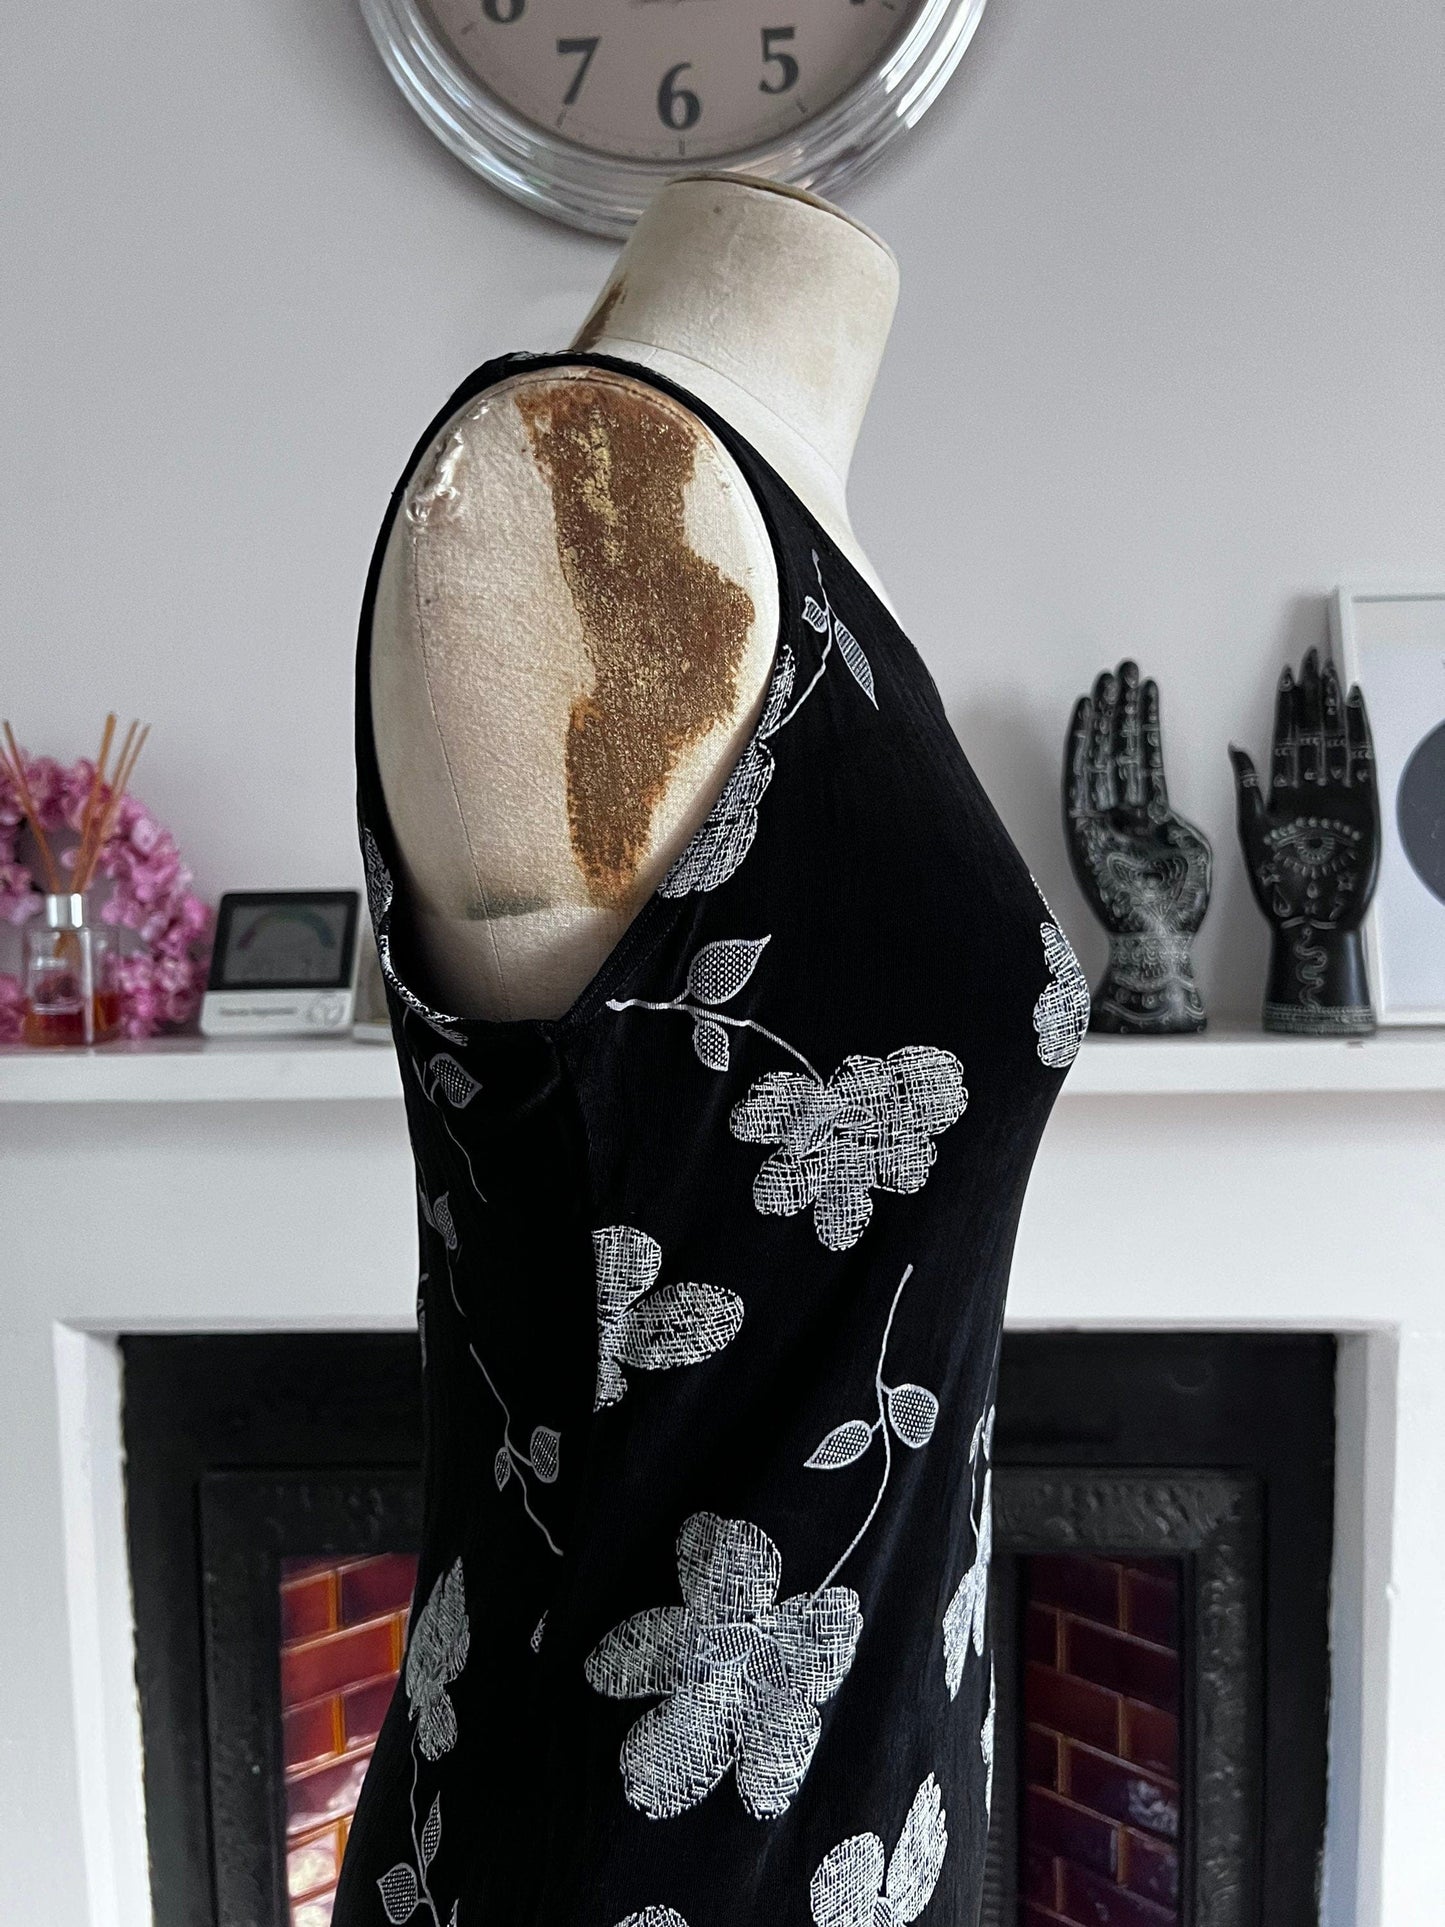 Vintage Black white Floral Maxi Dress - Size UK8/12 Stretch Lycra Body Con Black & White Dress with front split